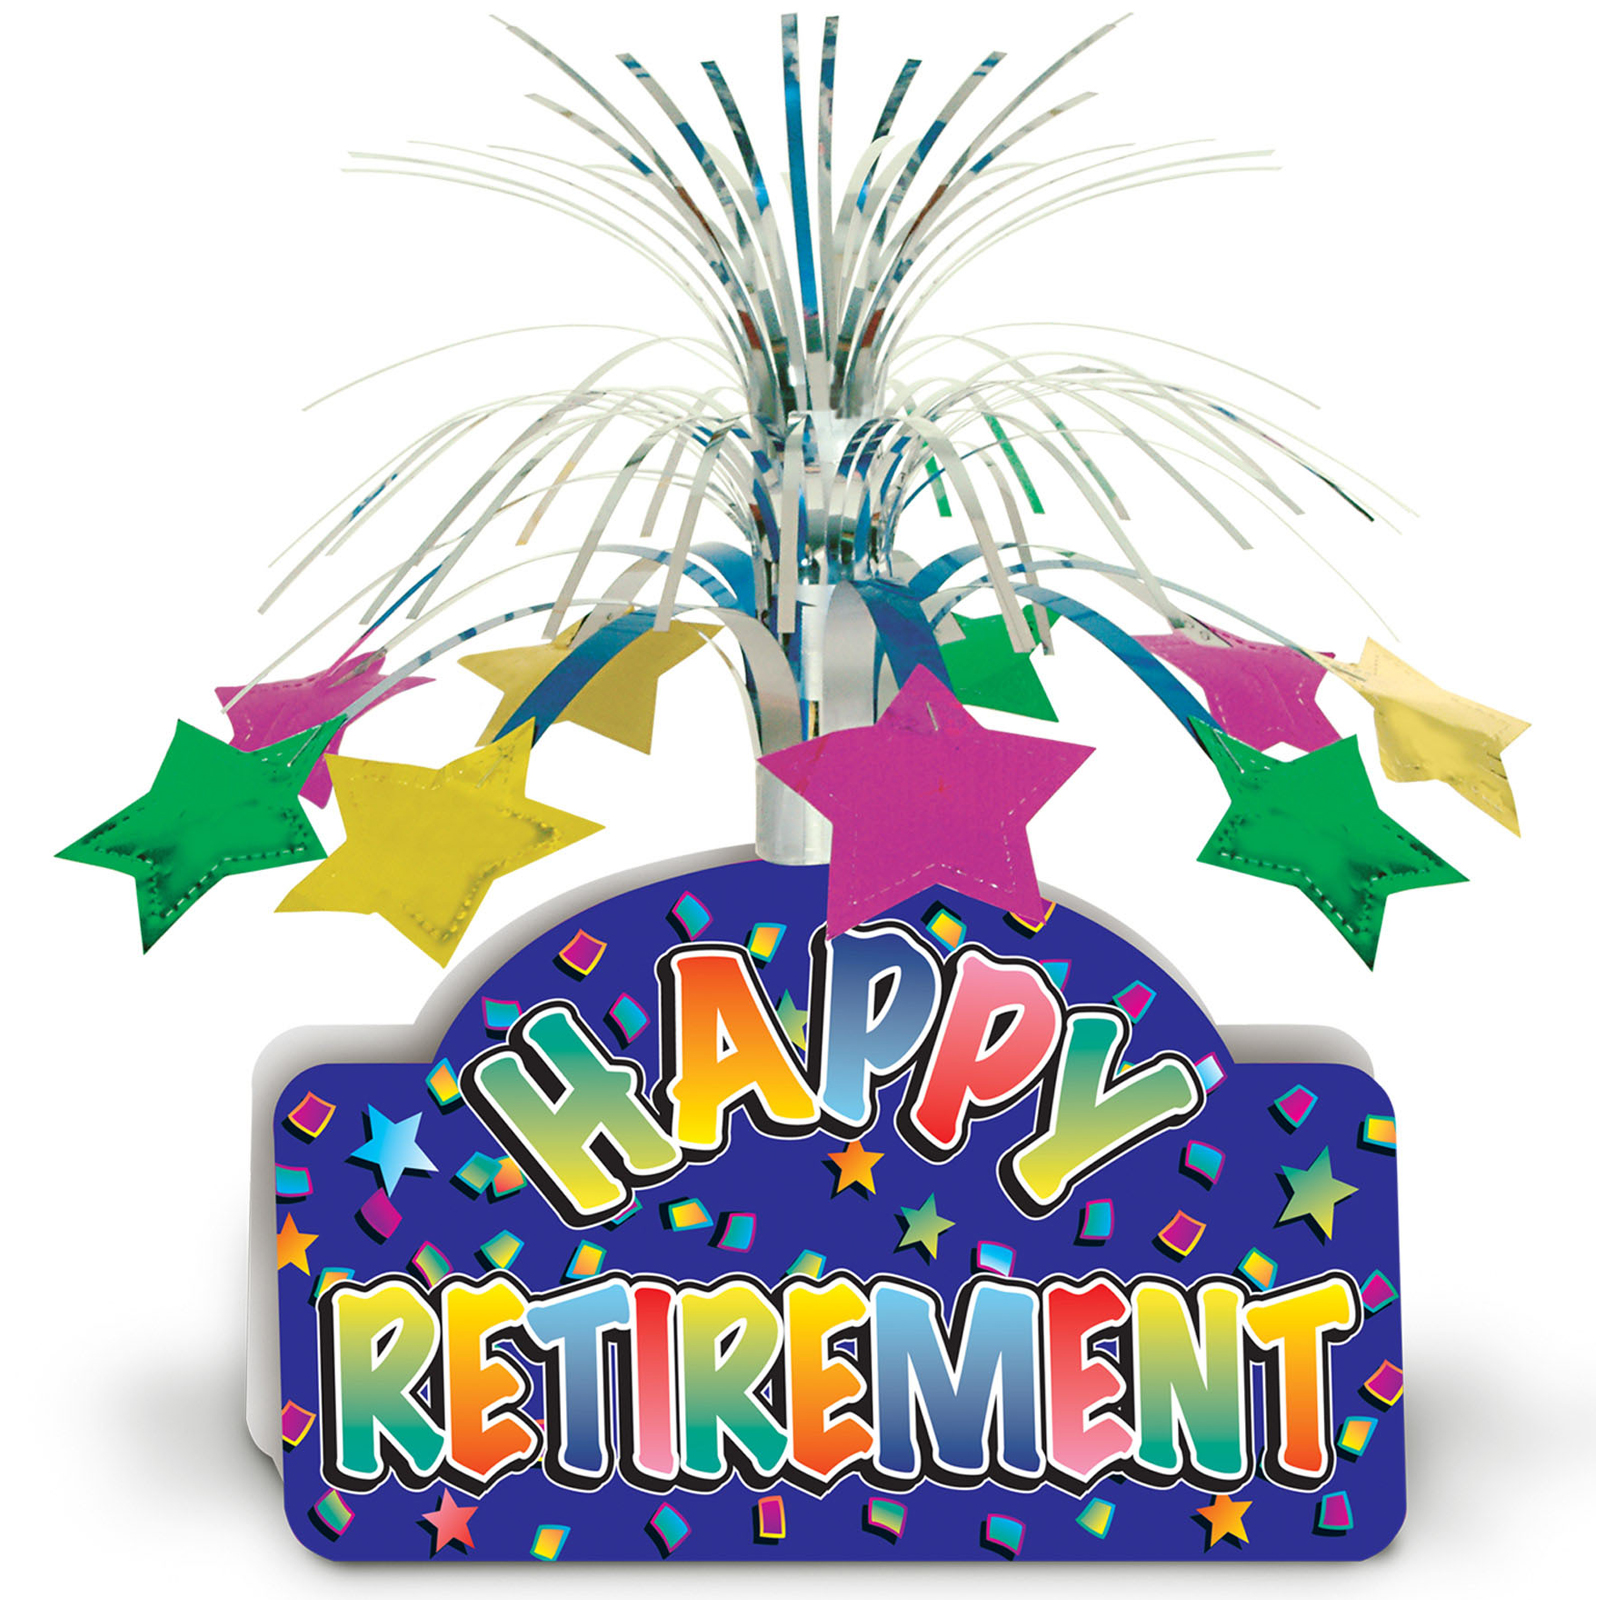 Free Retirement Reception Cliparts, Download Free Retirement Reception ...